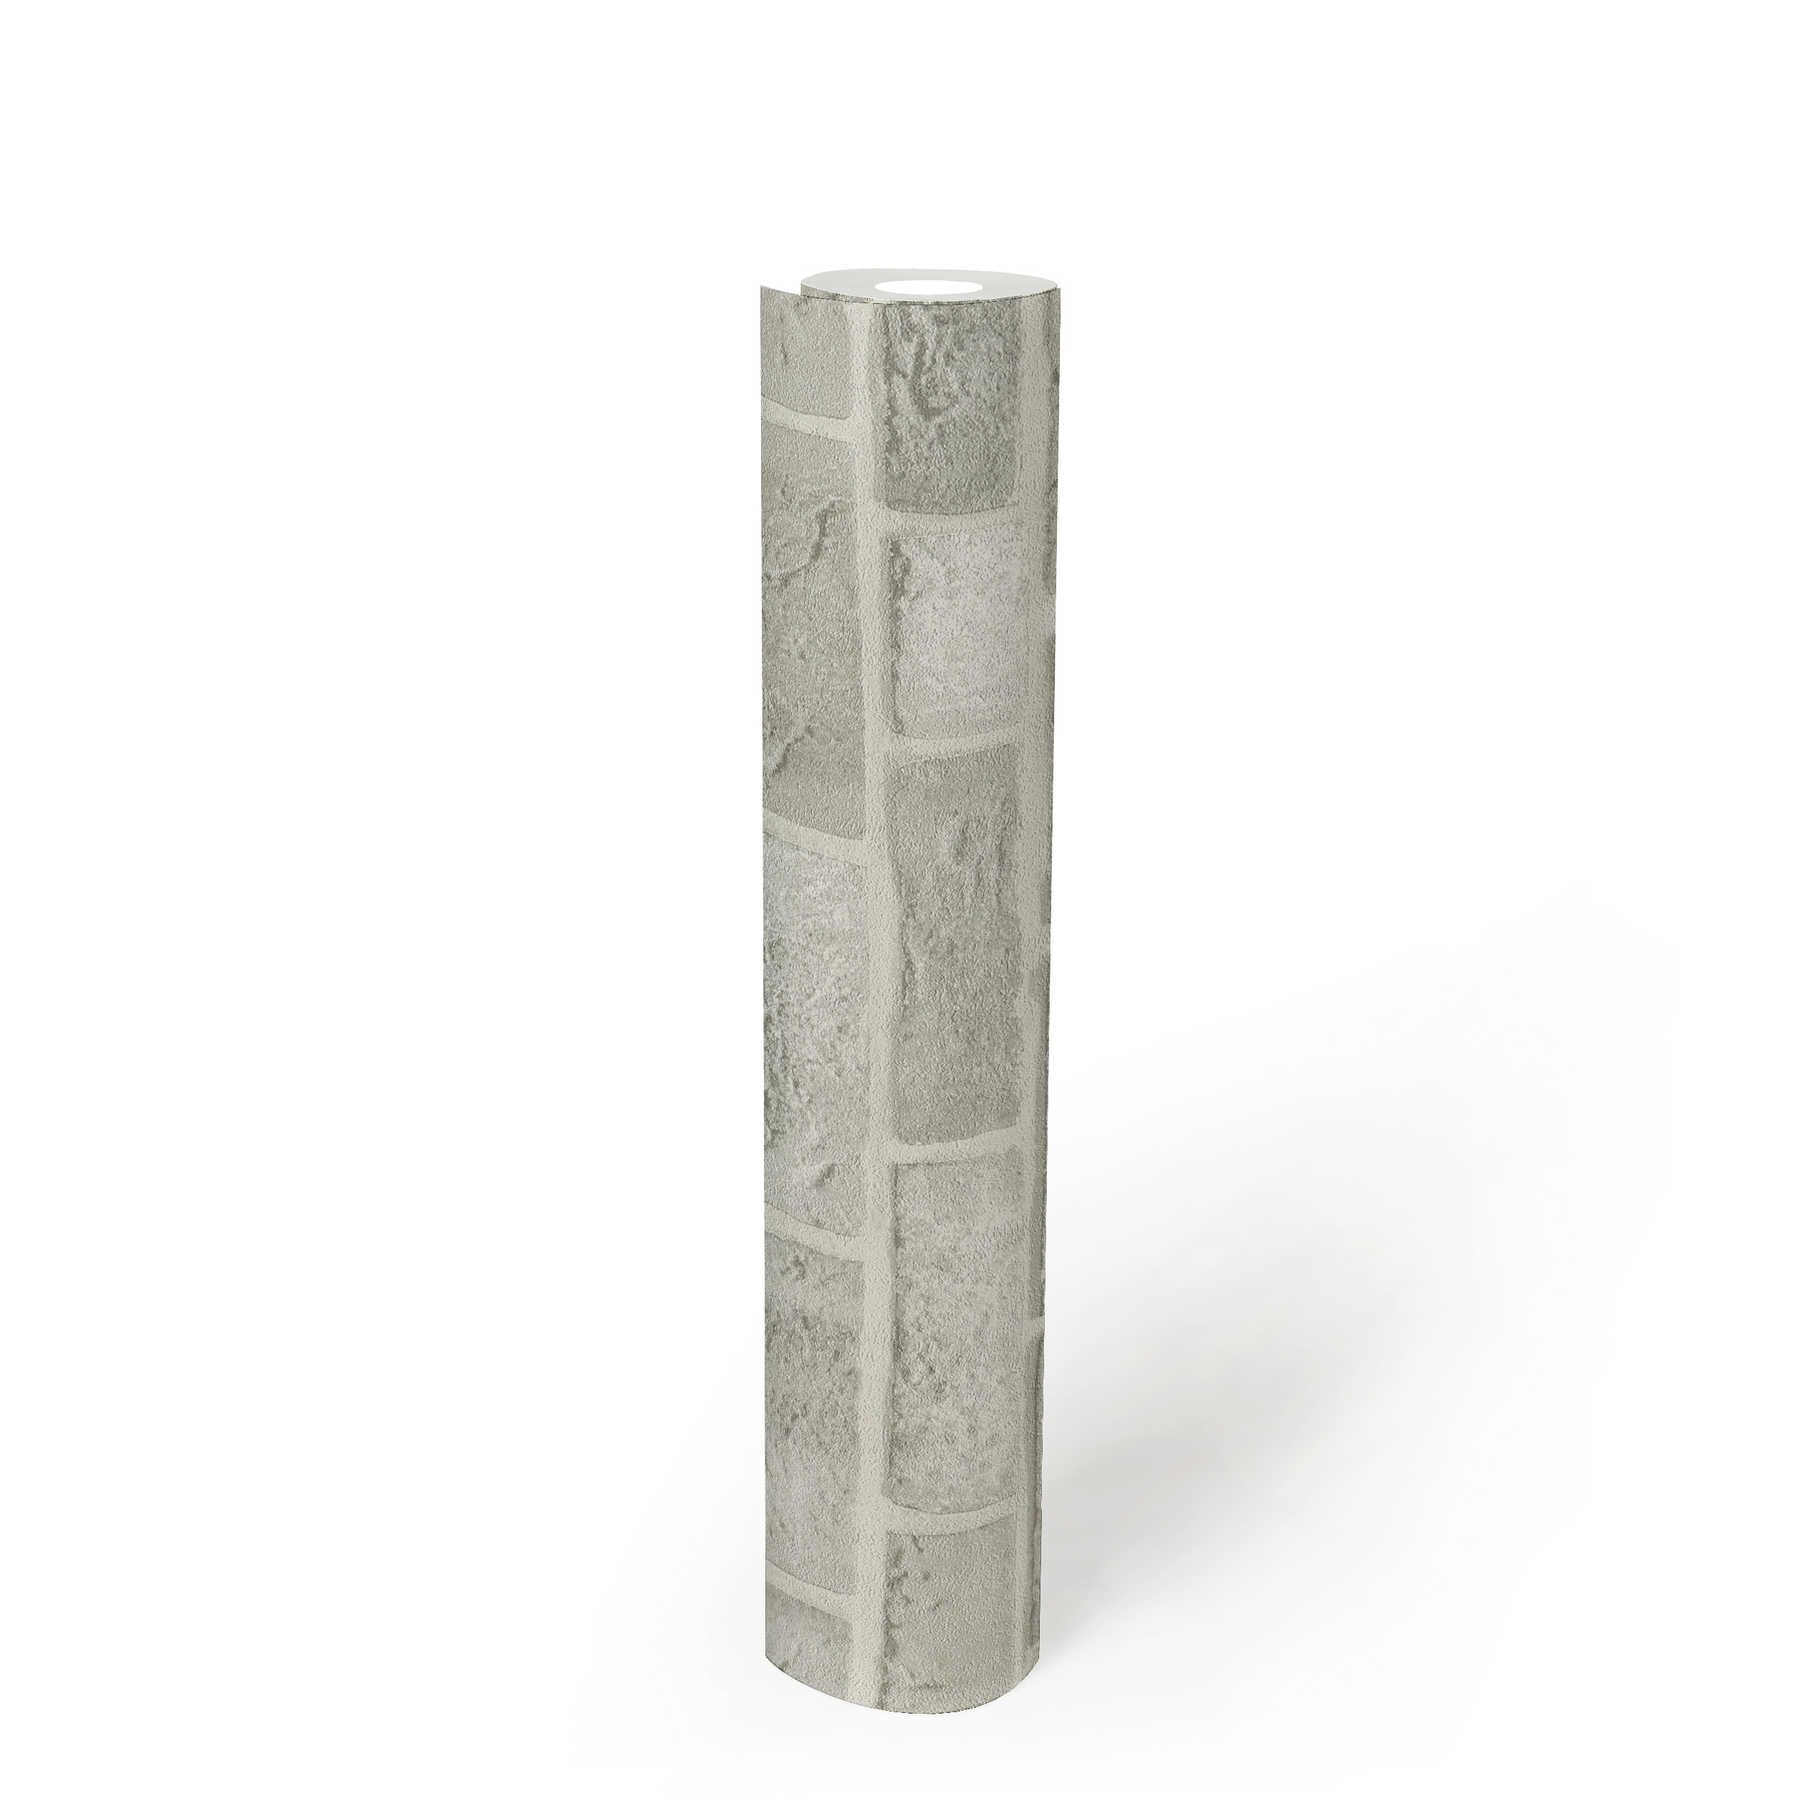             Wallpaper brick wall design 3D stone look - grey, white
        